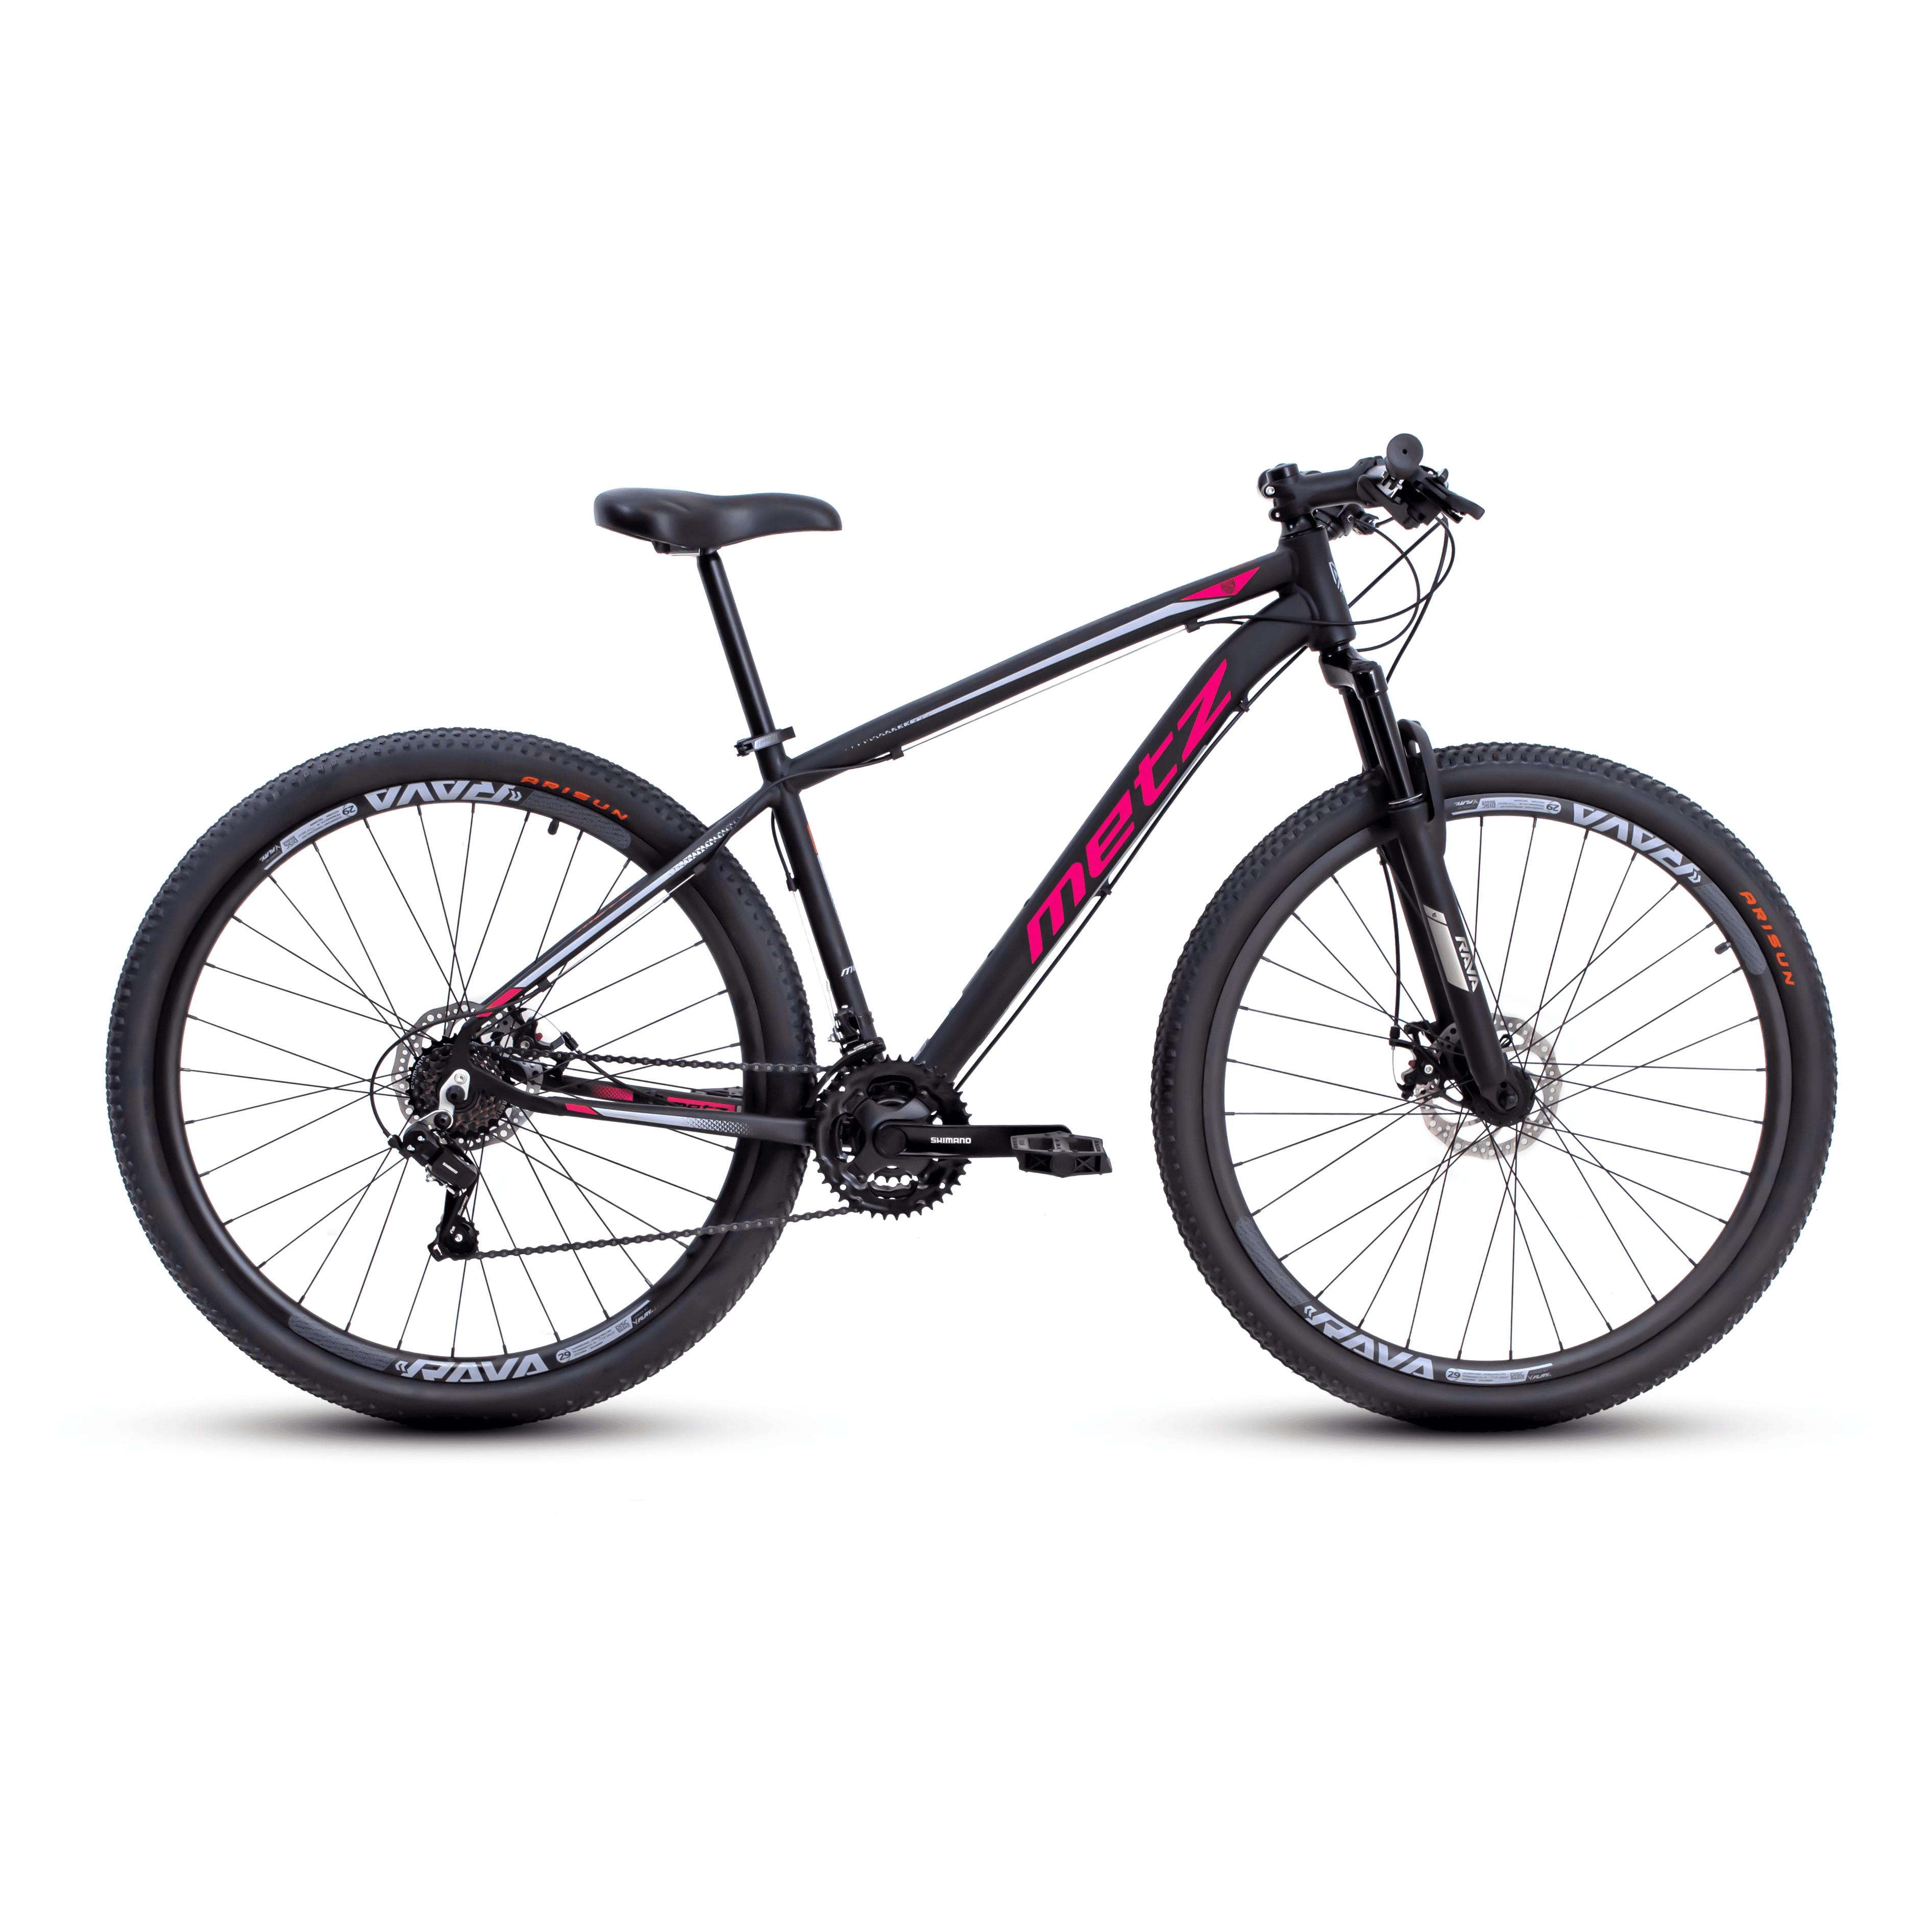 Bicicleta Metz Fuse Plus | 21V - Preto/Pink, 17"